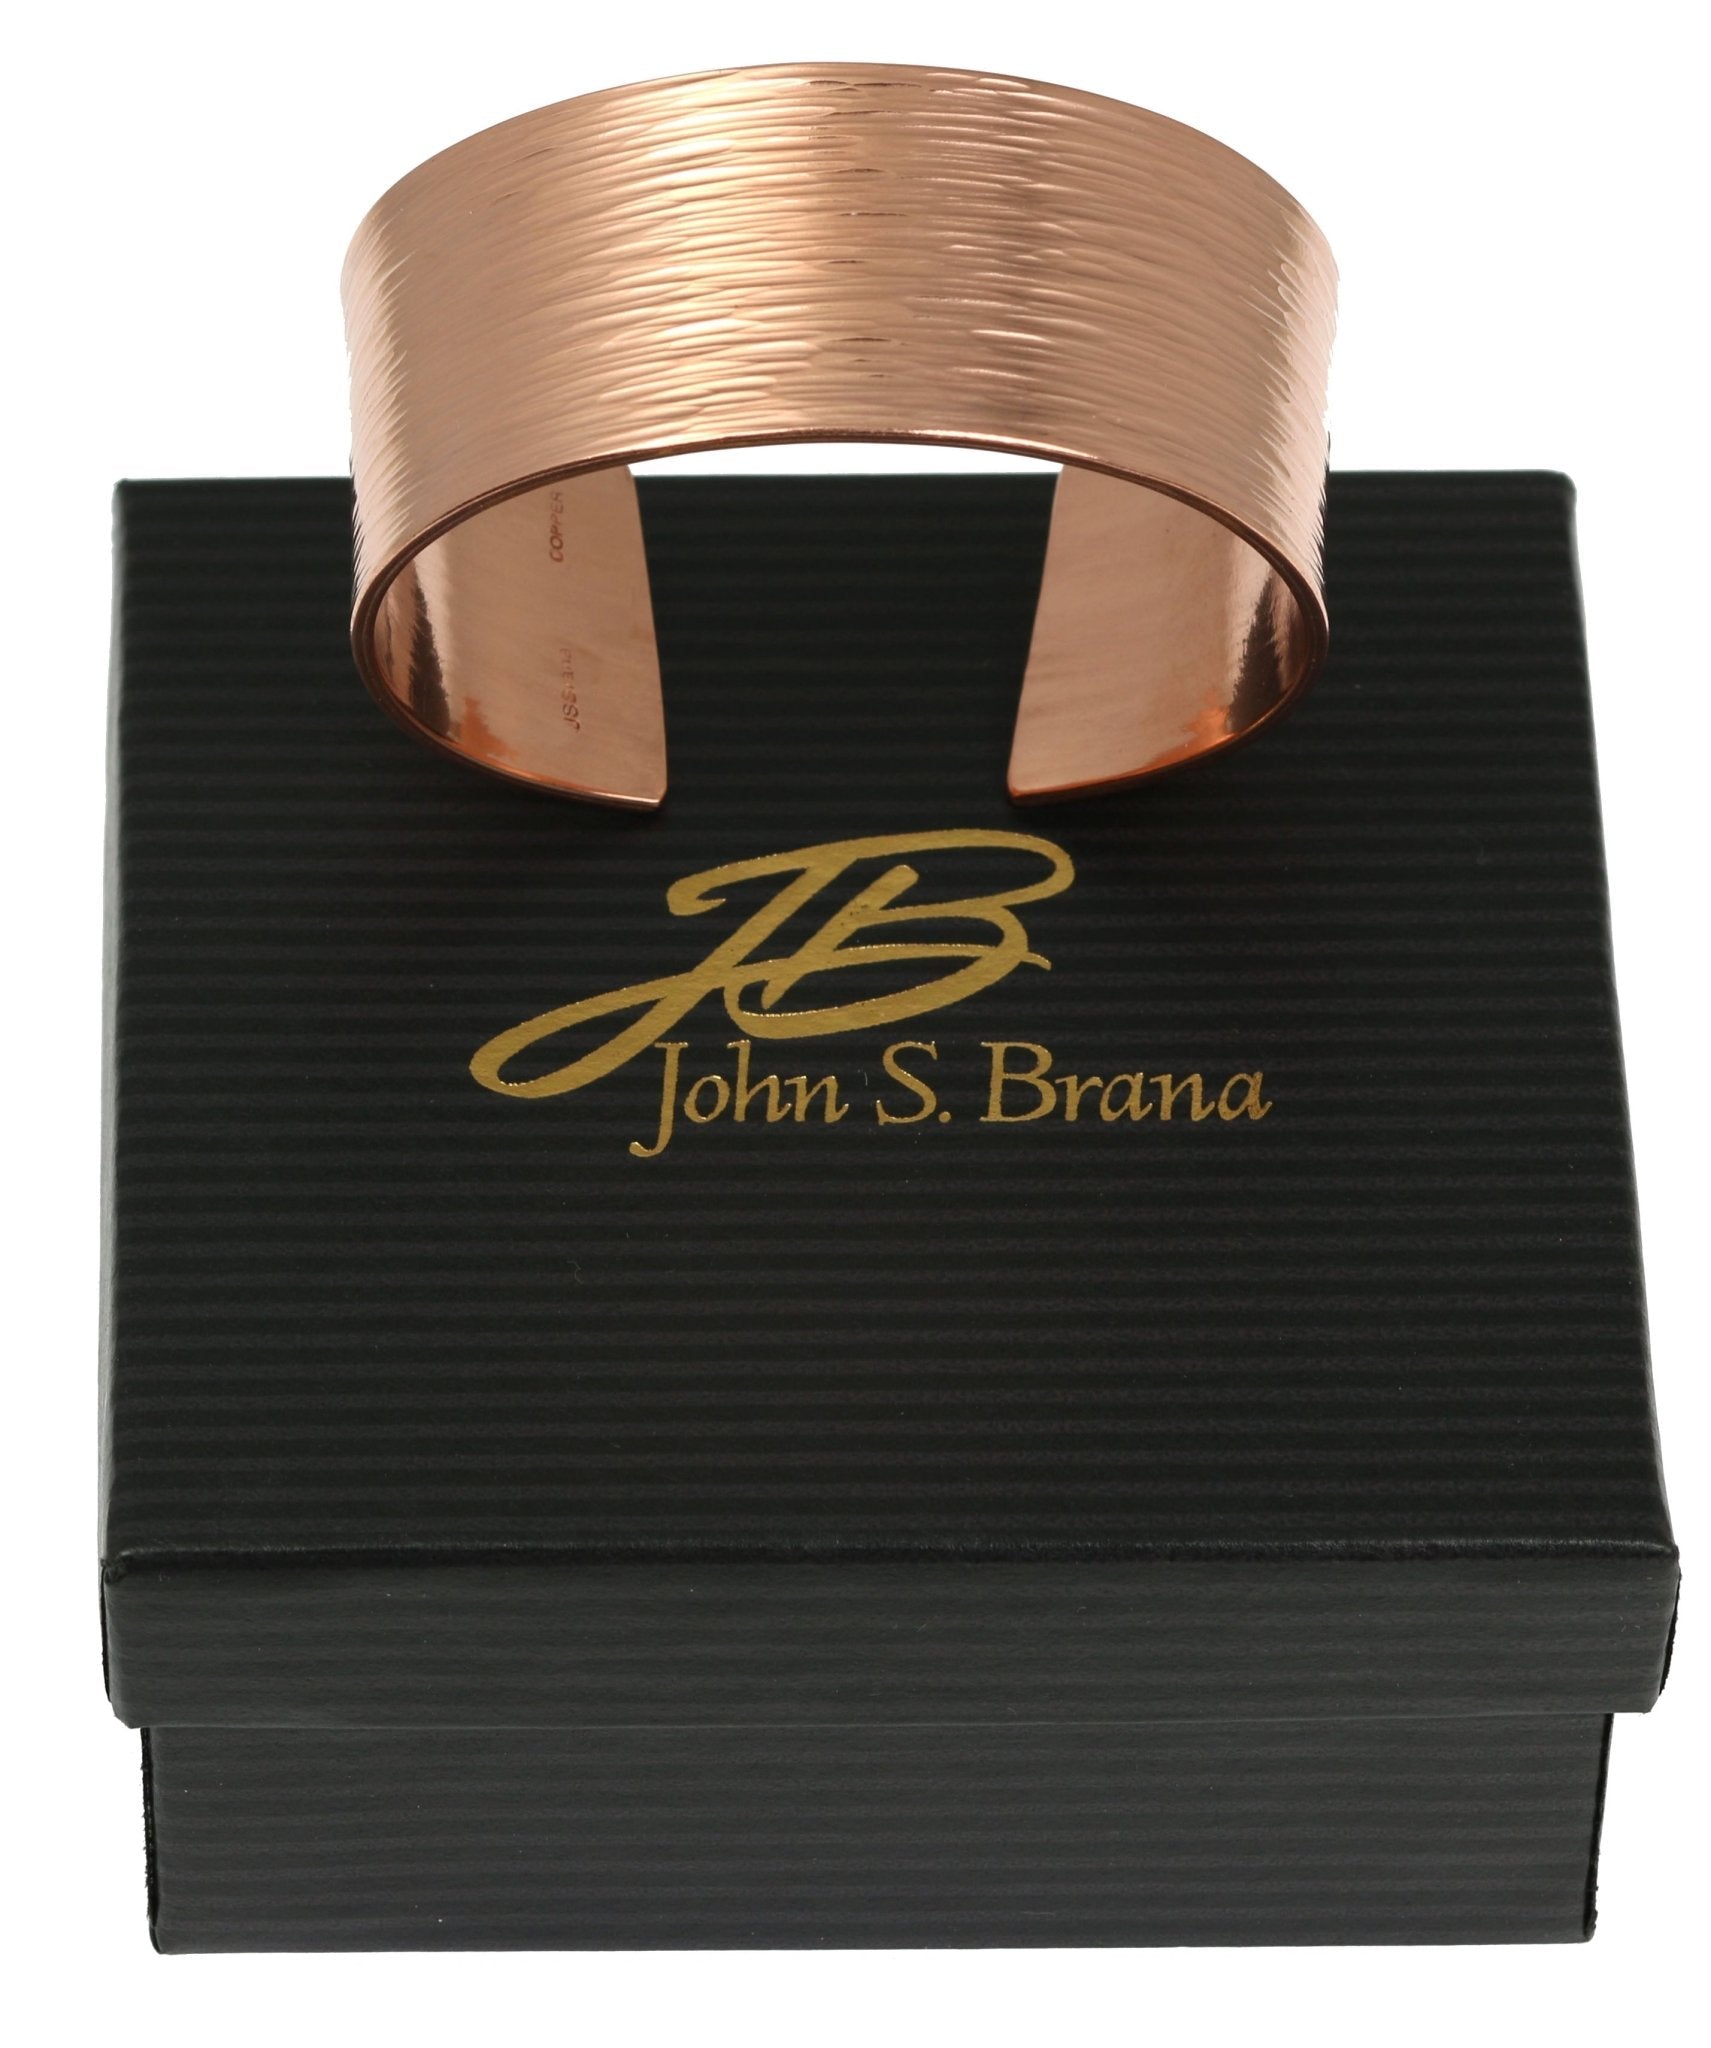 1 Inch Wide Bark Copper Cuff Bracelet on Black Gift Box